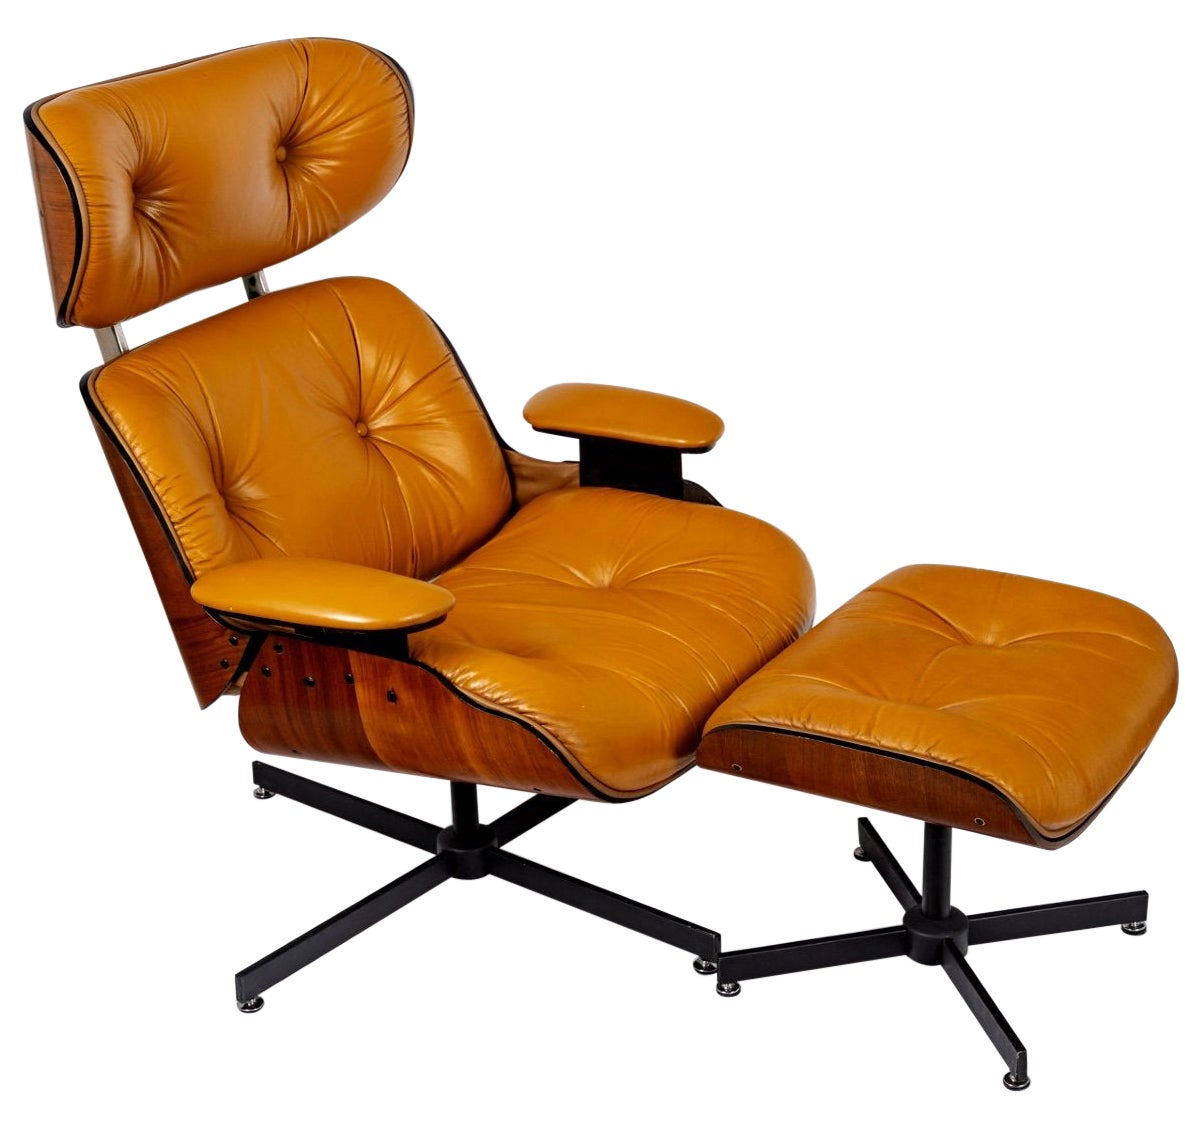 Fauteuil de salon & Son Ottoman - Cuir et aluminium - Designer Charles & Ray Eames -